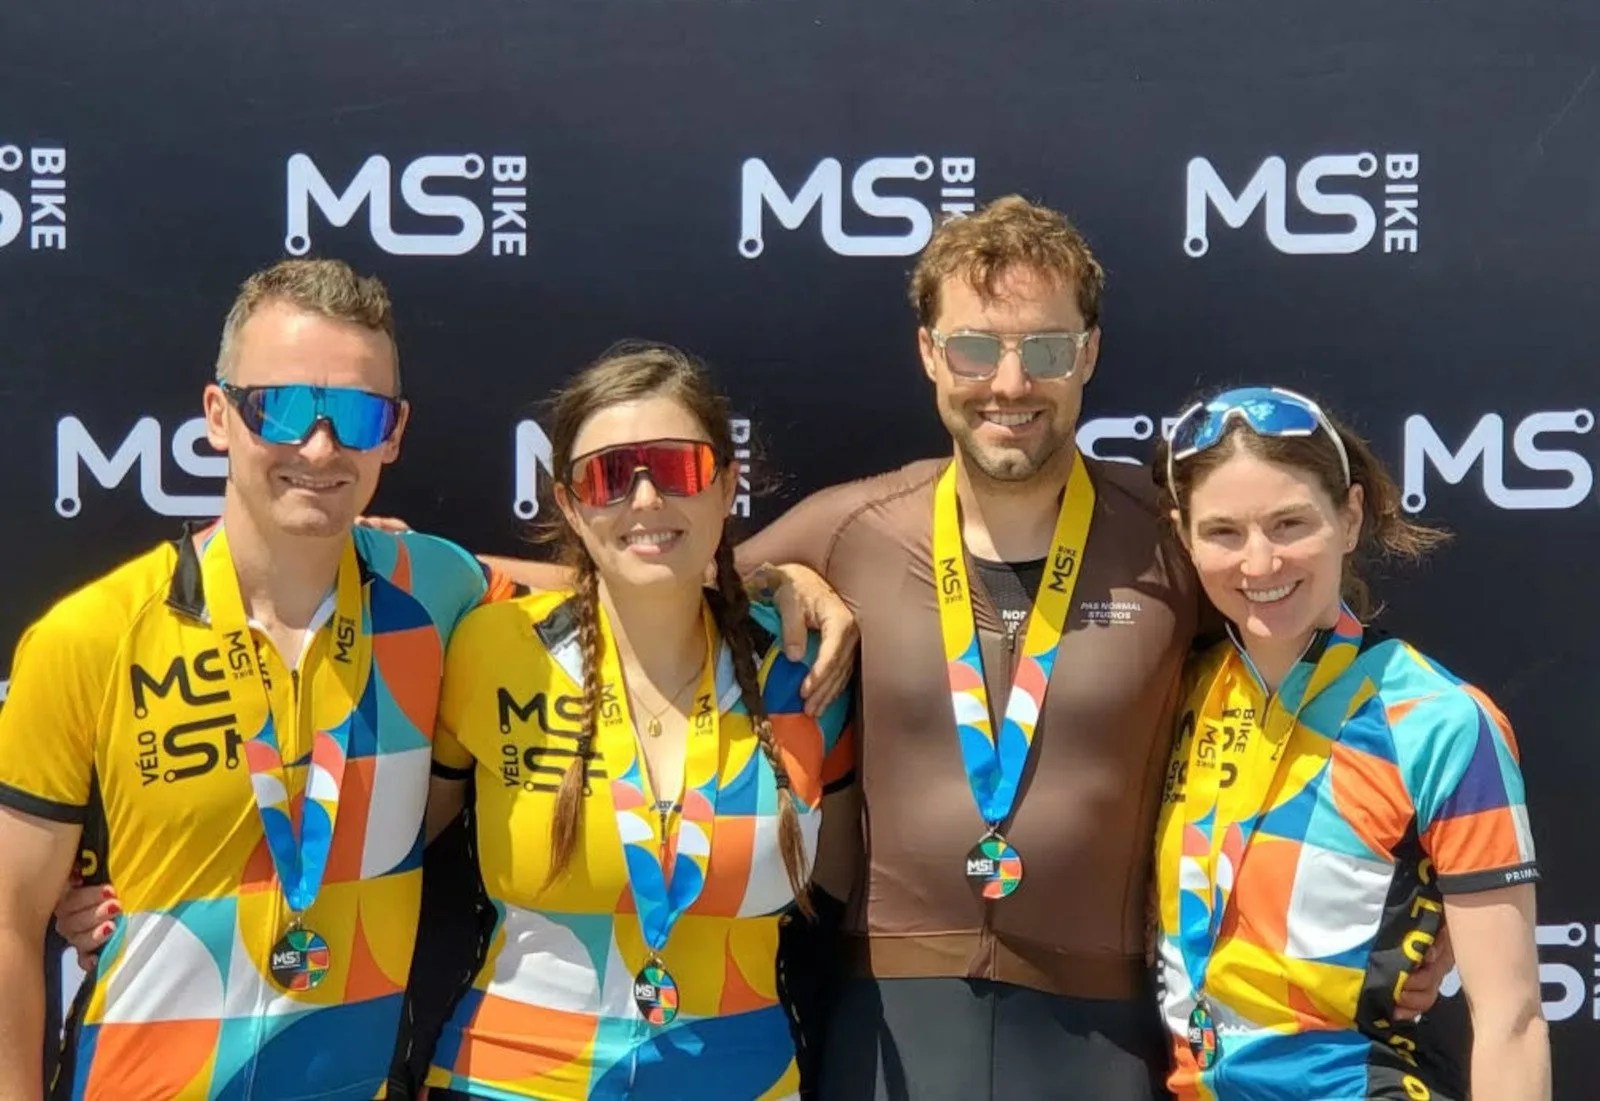 Jeffrey Doering: The inspiring experience of MS Bike